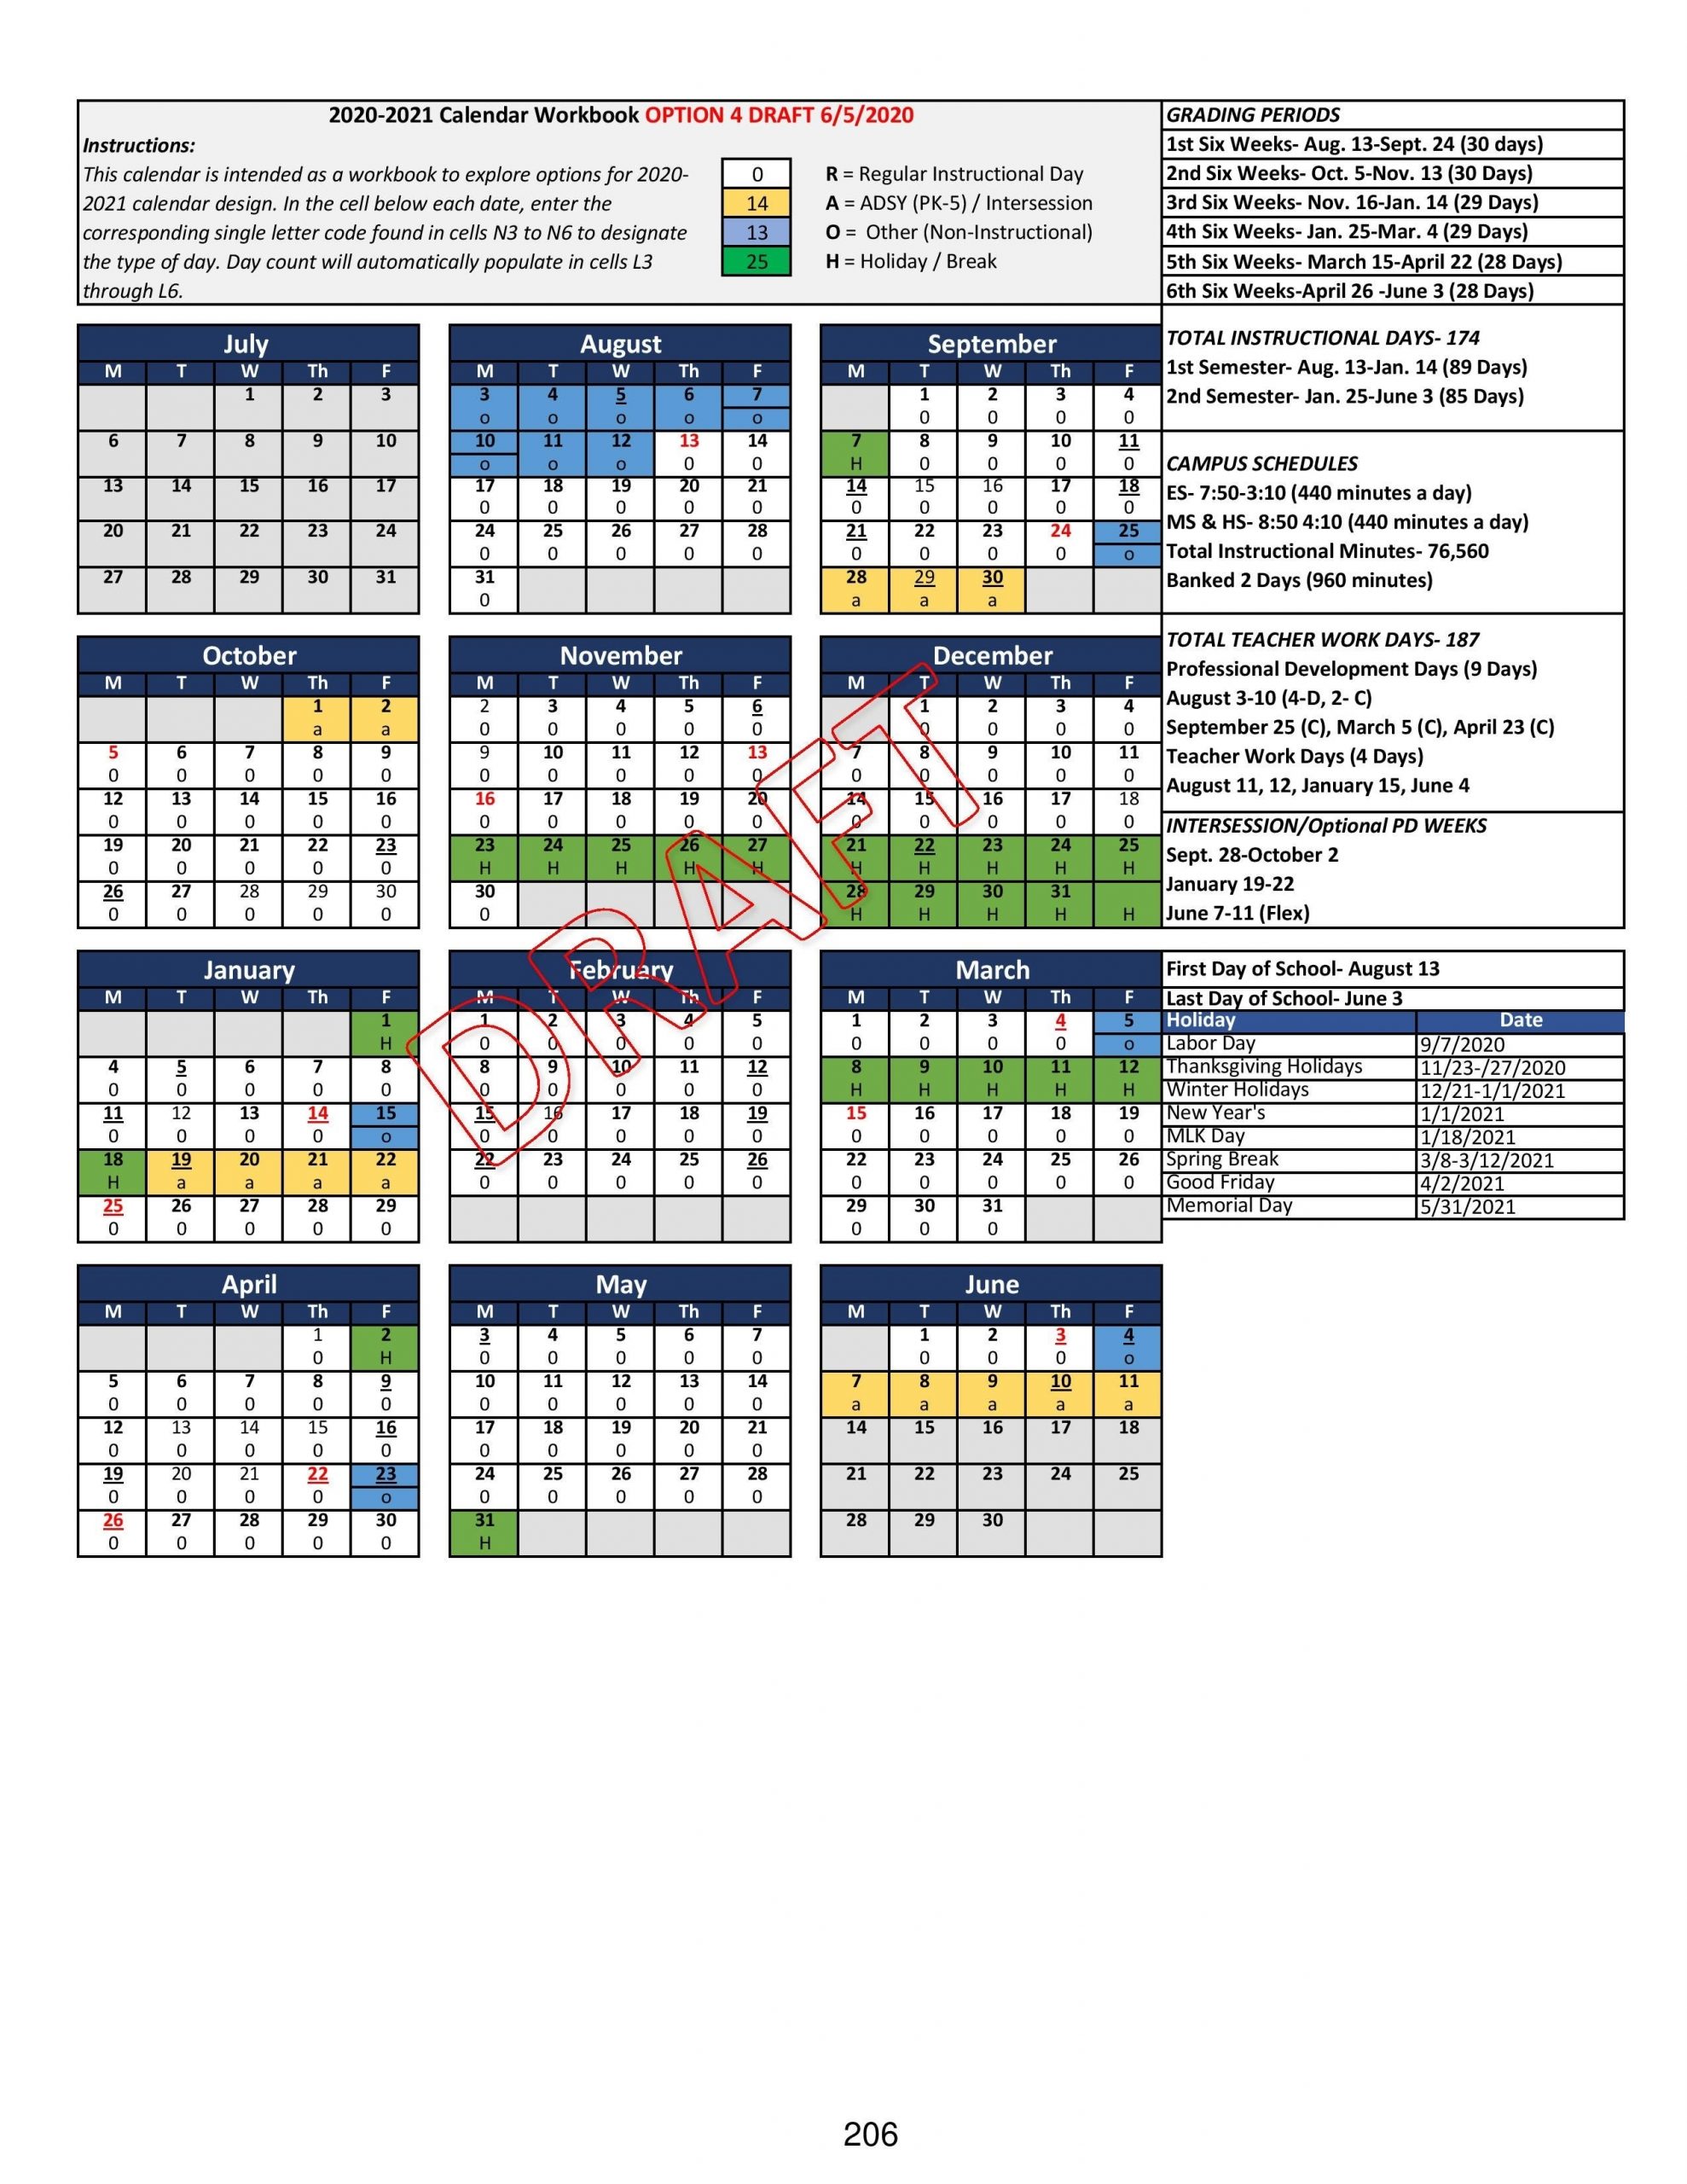 Take Mid Del Pulic Schools Fall 2021 Calendar